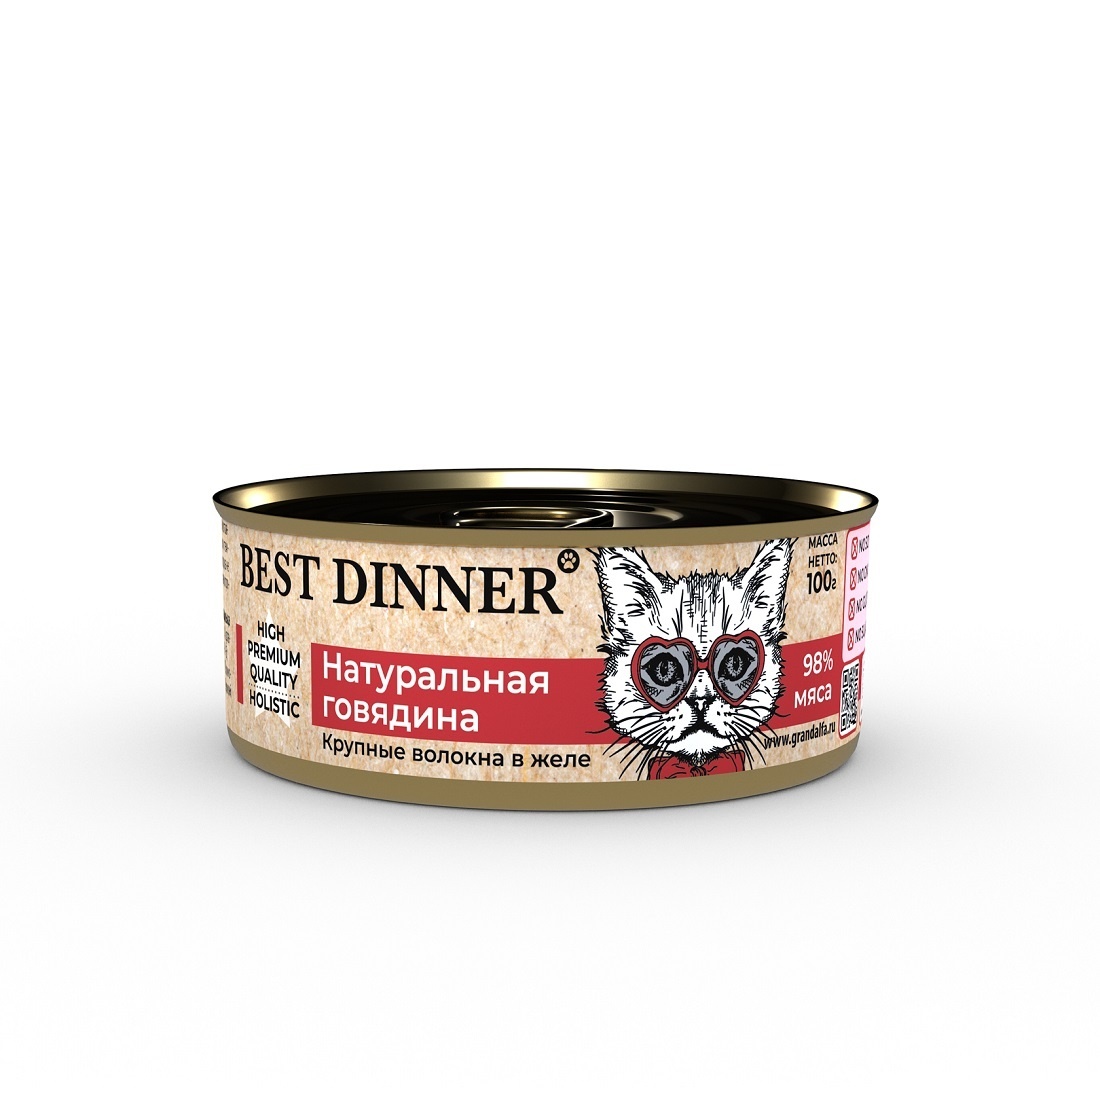 Best Dinner консервы для кошек в желе 